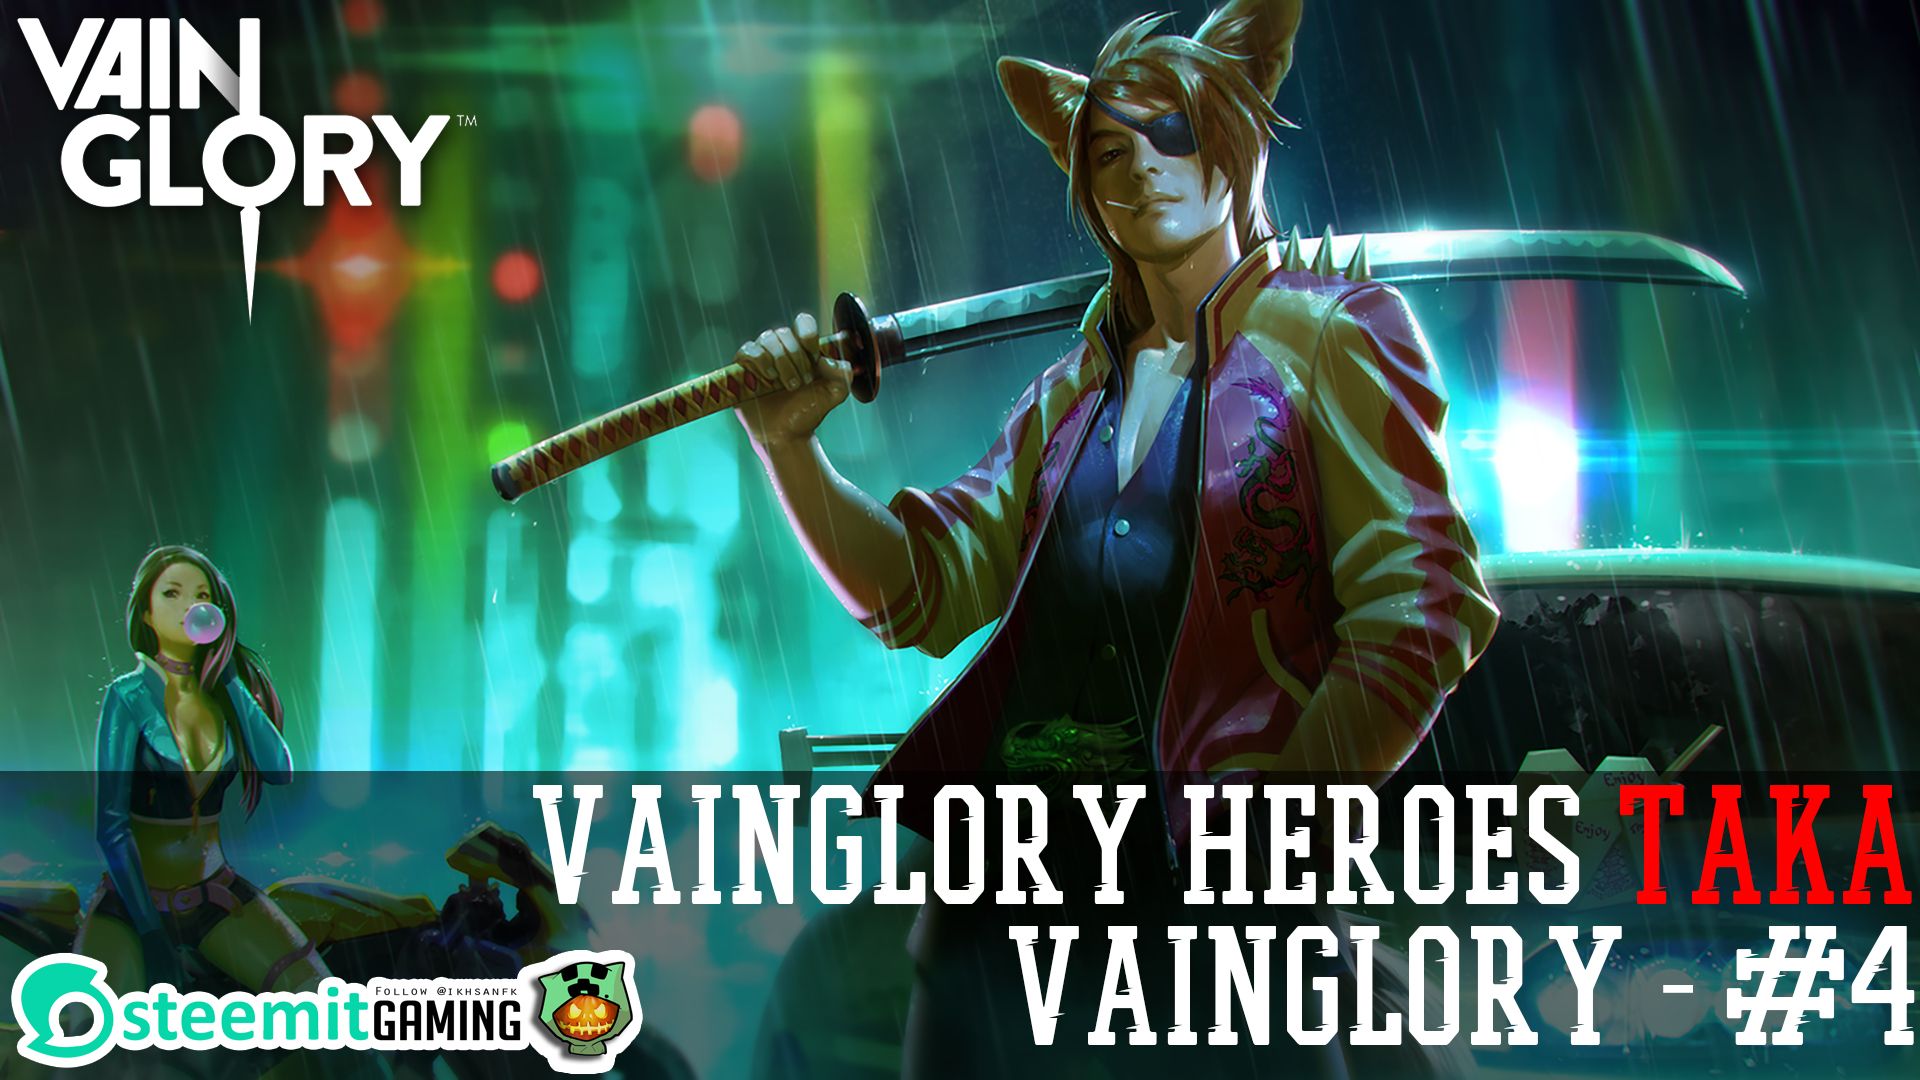 Vainglory, Author at Vainglory